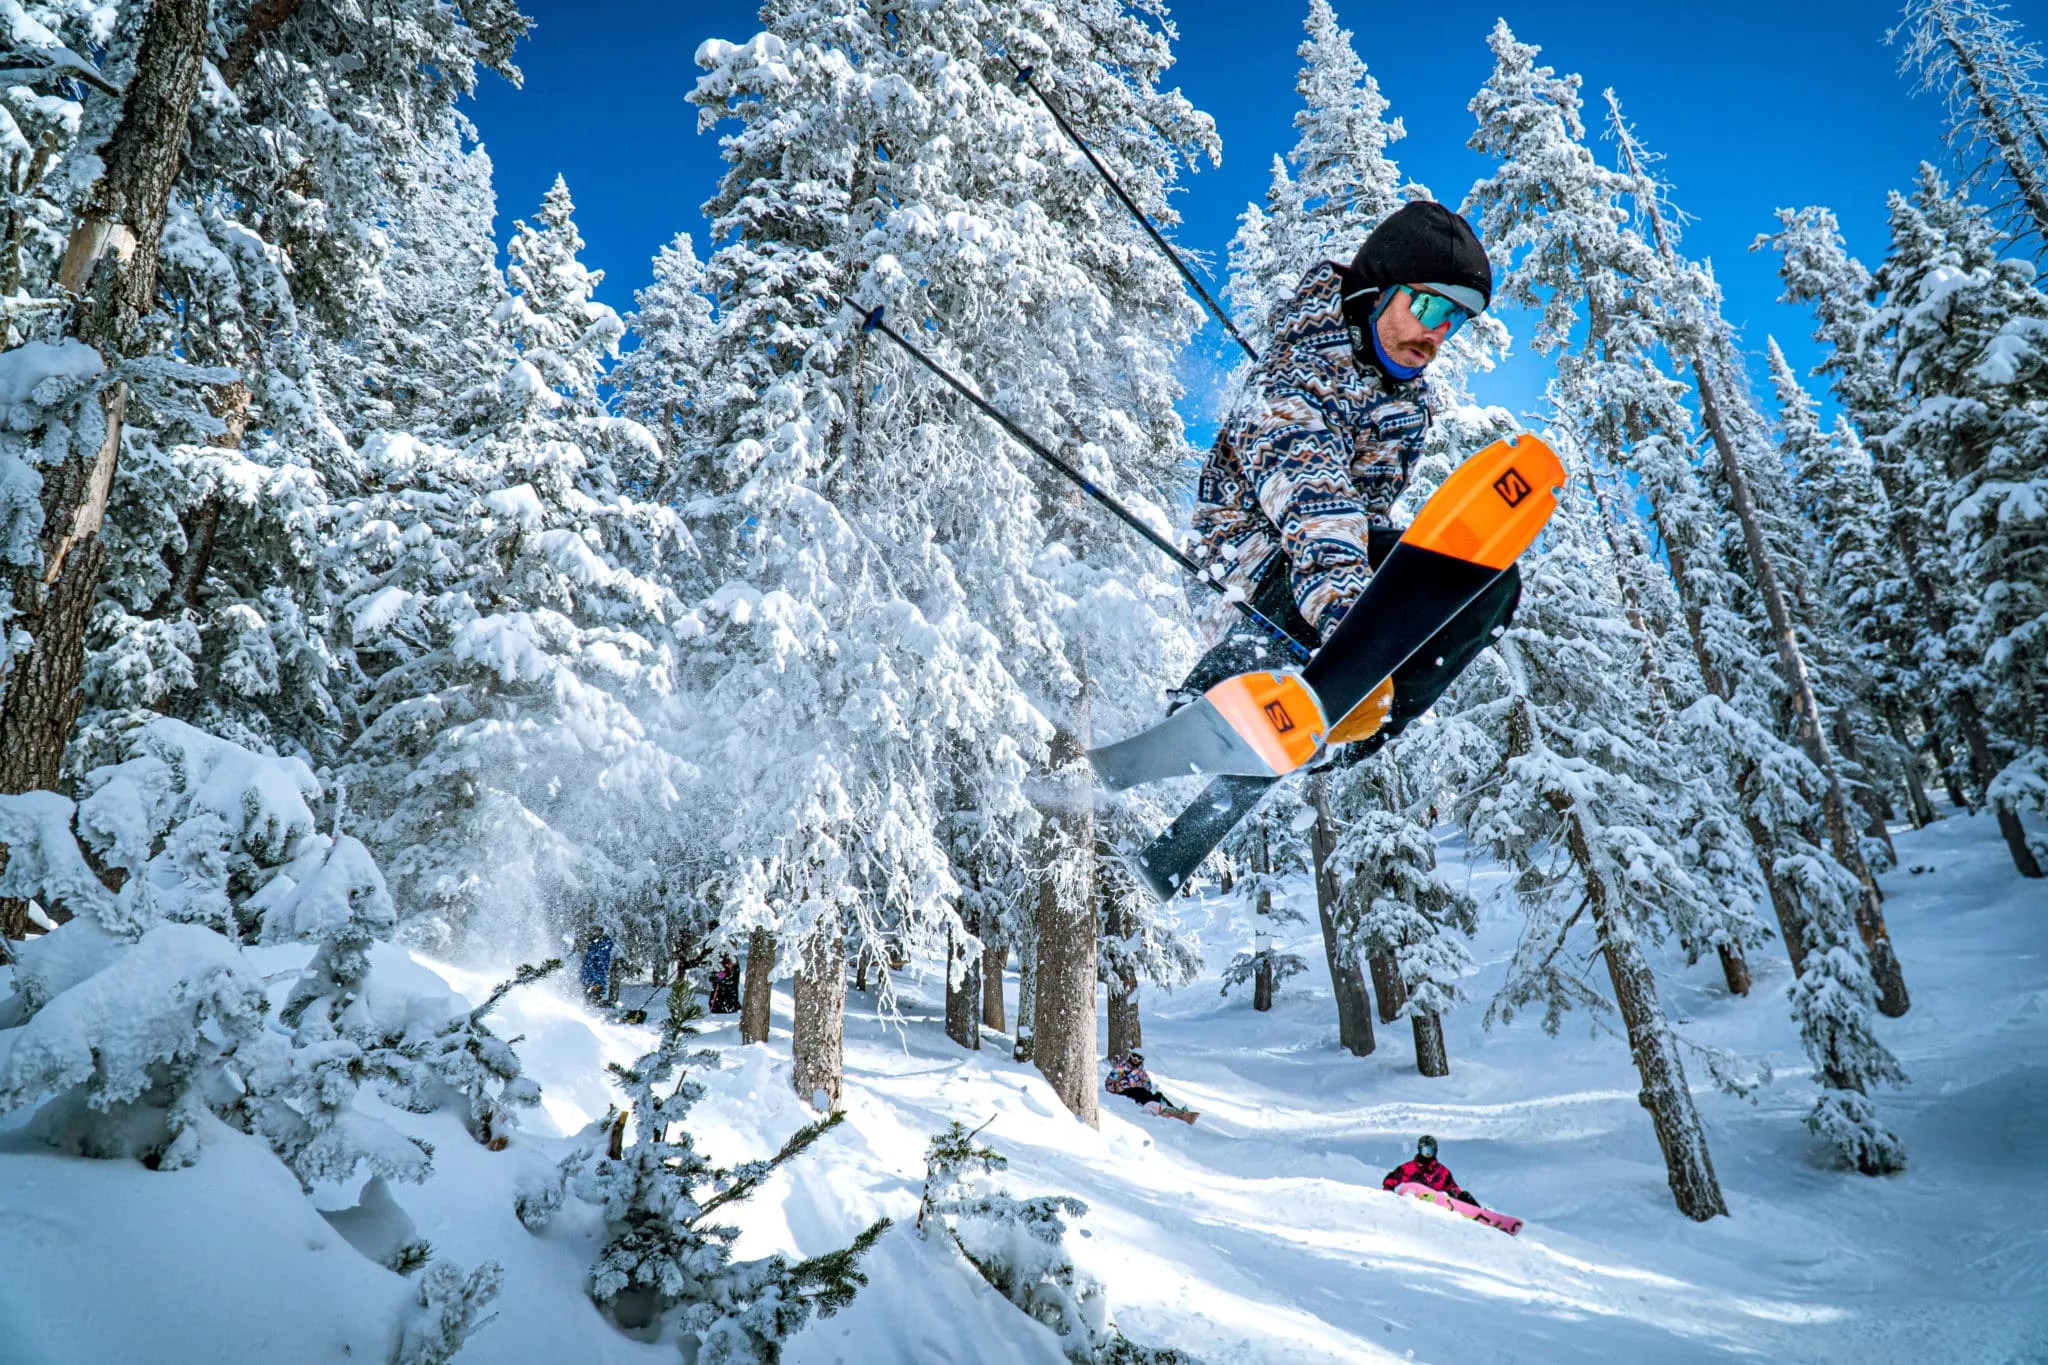 Eden Ski & Snowboard School in Romania, Europe | Snowboarding,Skiing - Rated 0.9